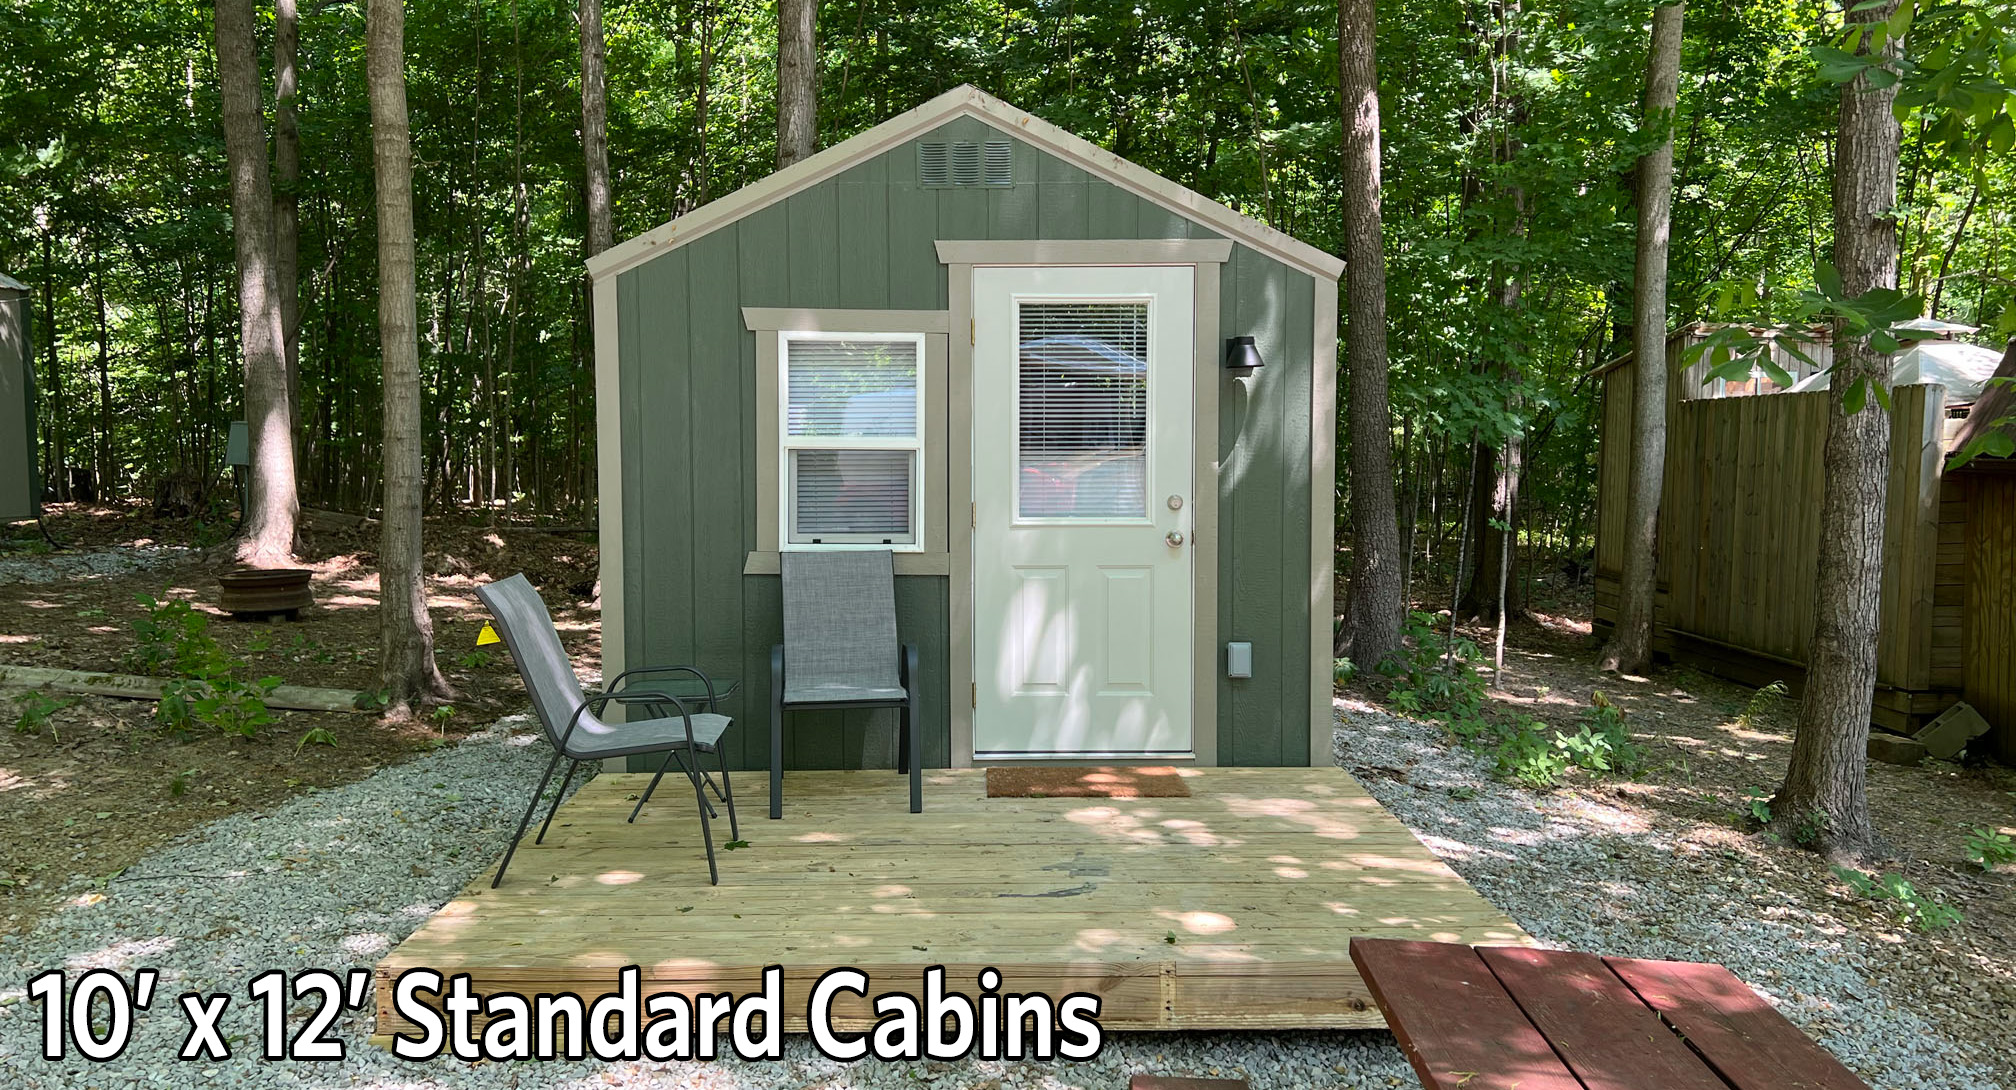 10' x 12' Standard Cabins exterior view